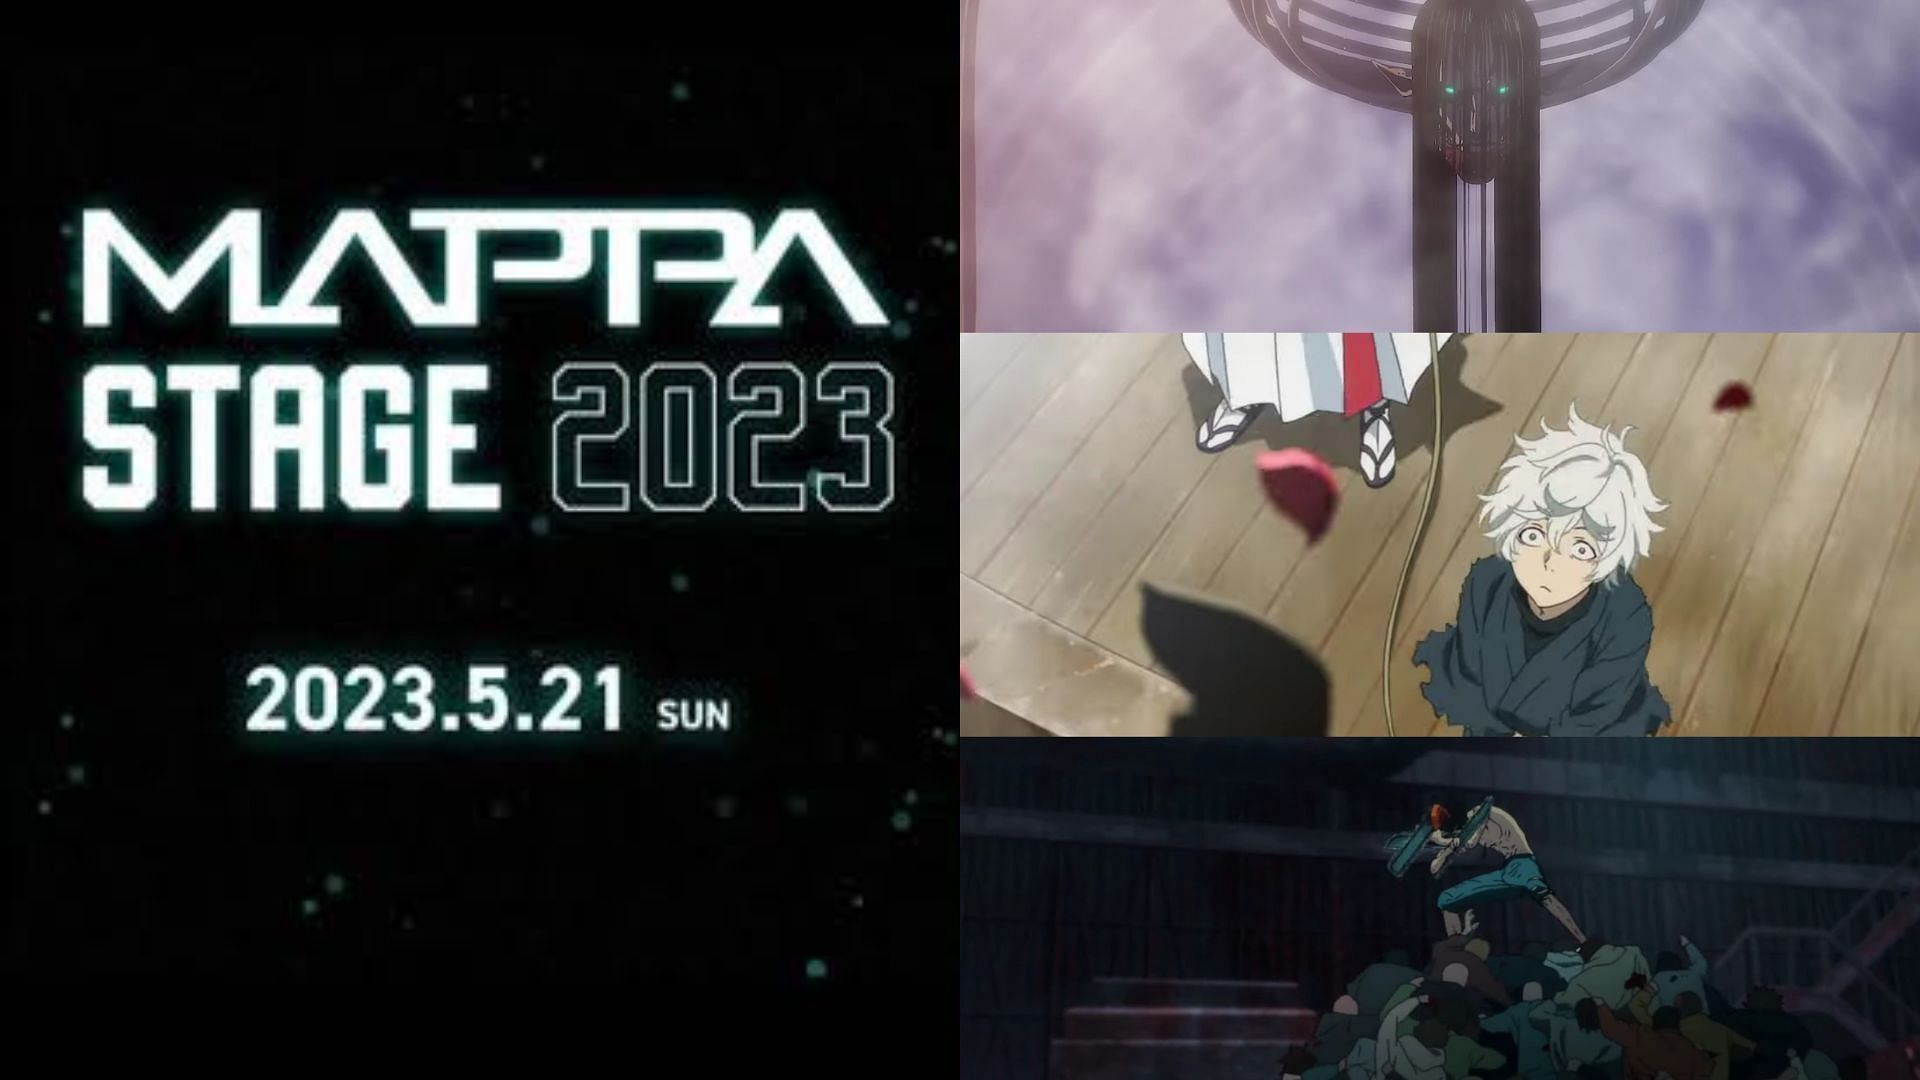 MAPPA Stage 2023 and its anime lineup (Image via Sportskeeda)